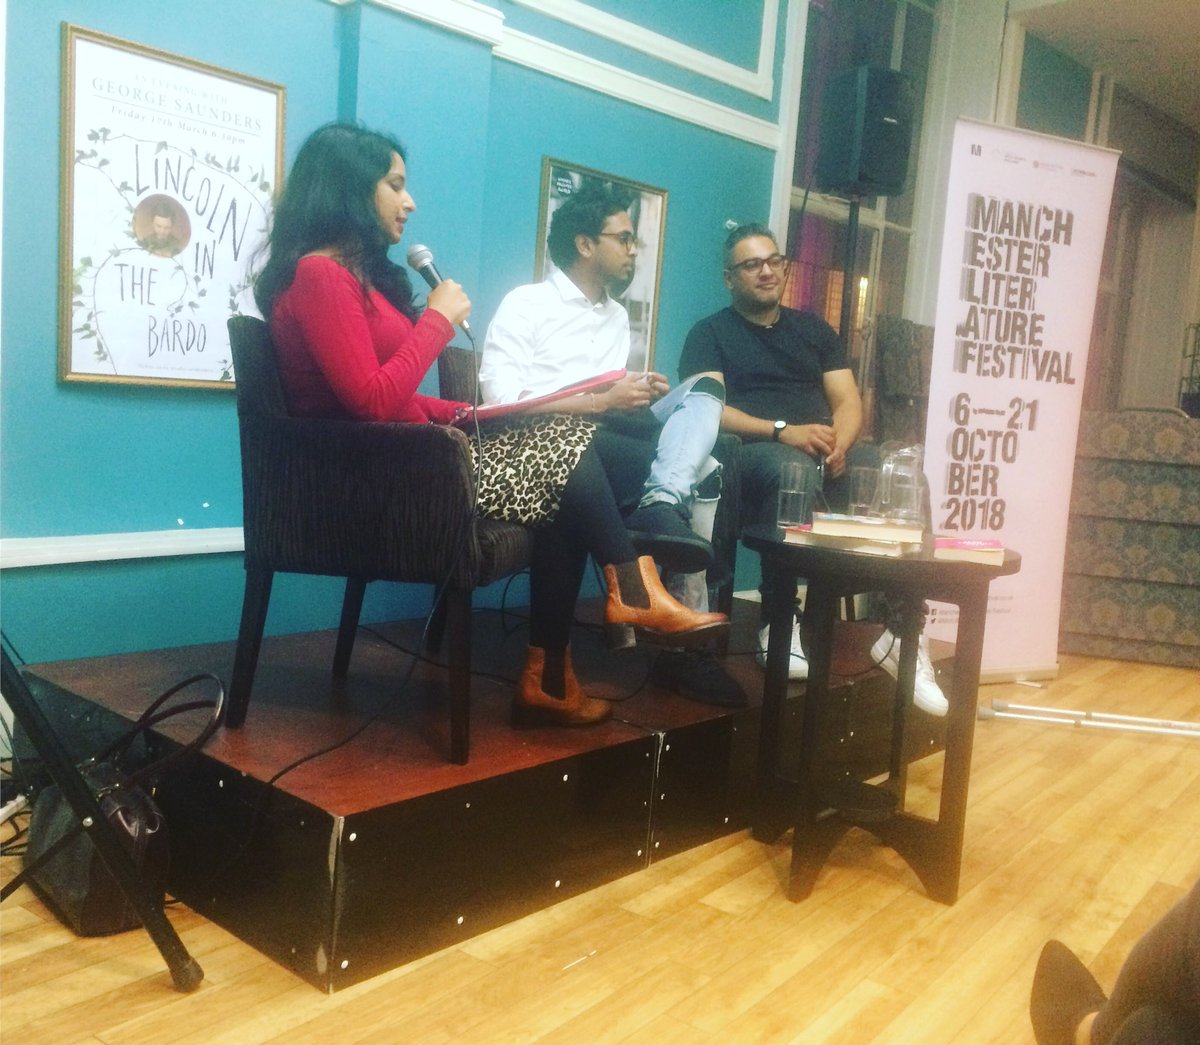 Anita Sethi asking questions with Guy Gunaratne and Nikesh Shukla. #mlf2018 @McrLitFest